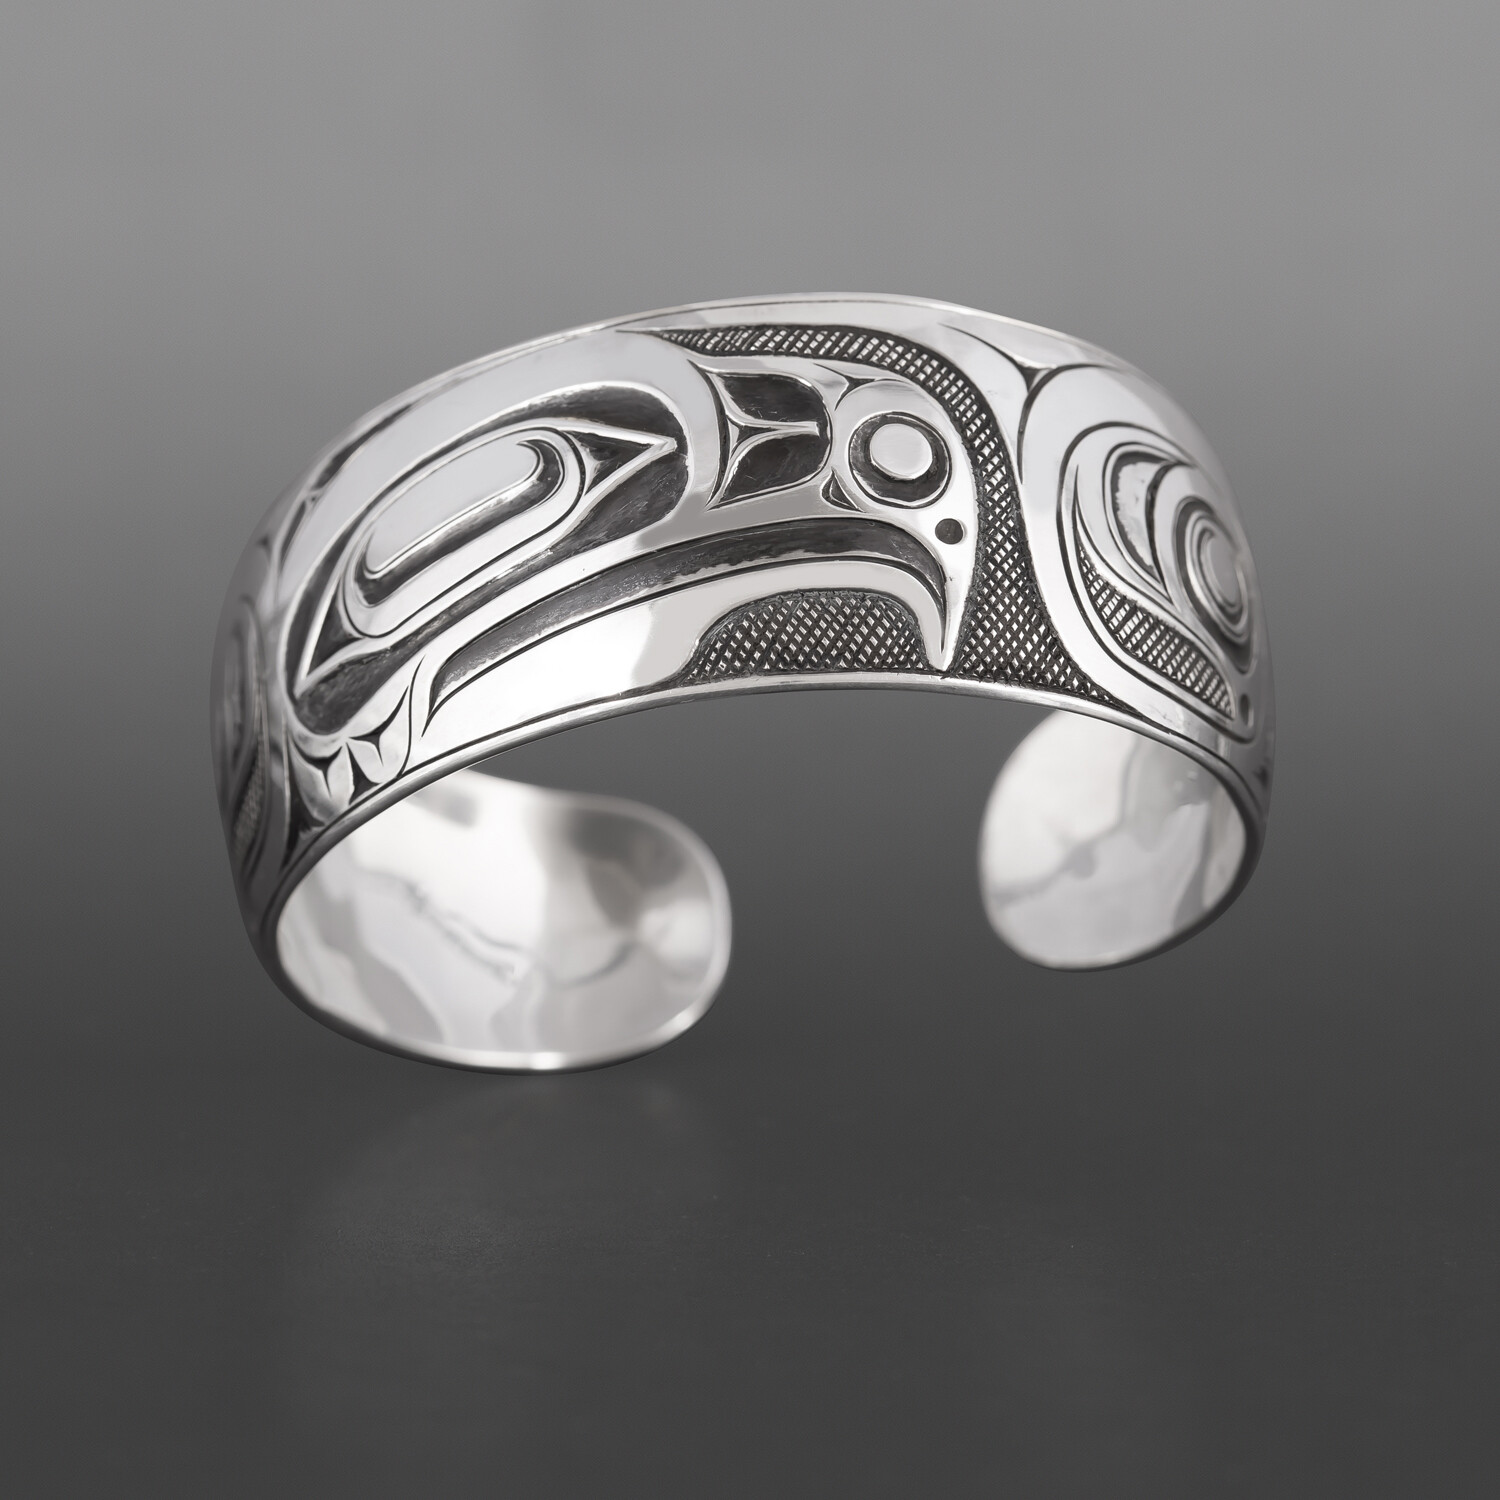 Haida Eagle Bracelet
Ernest Swanson
Haida
Silver
$1200